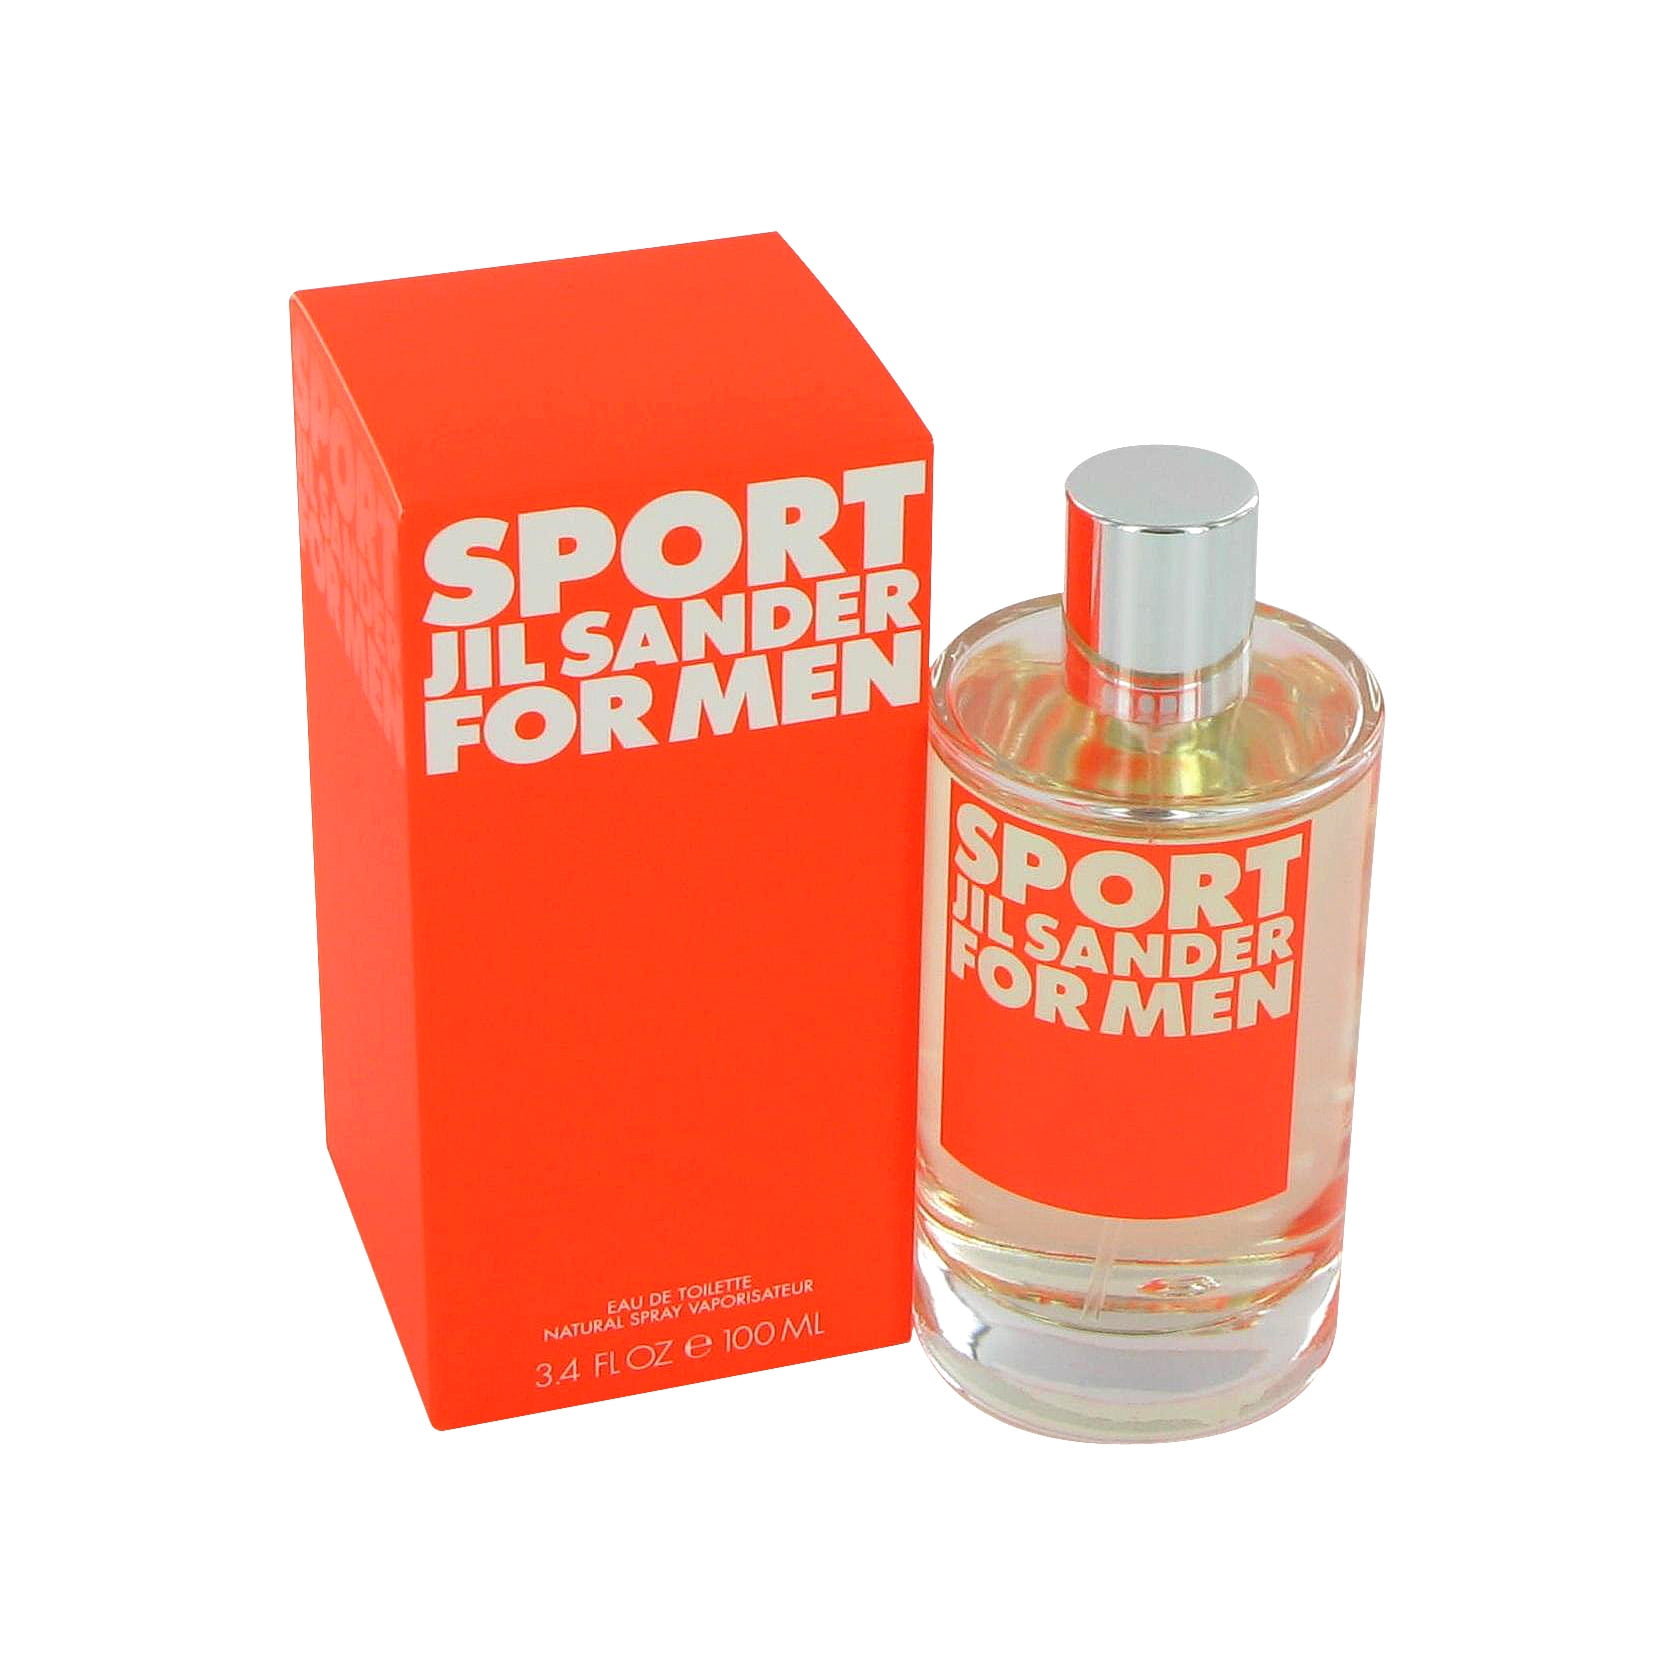 1920x1080 resolution | orange Sport Jil Sander for men with box HD ...